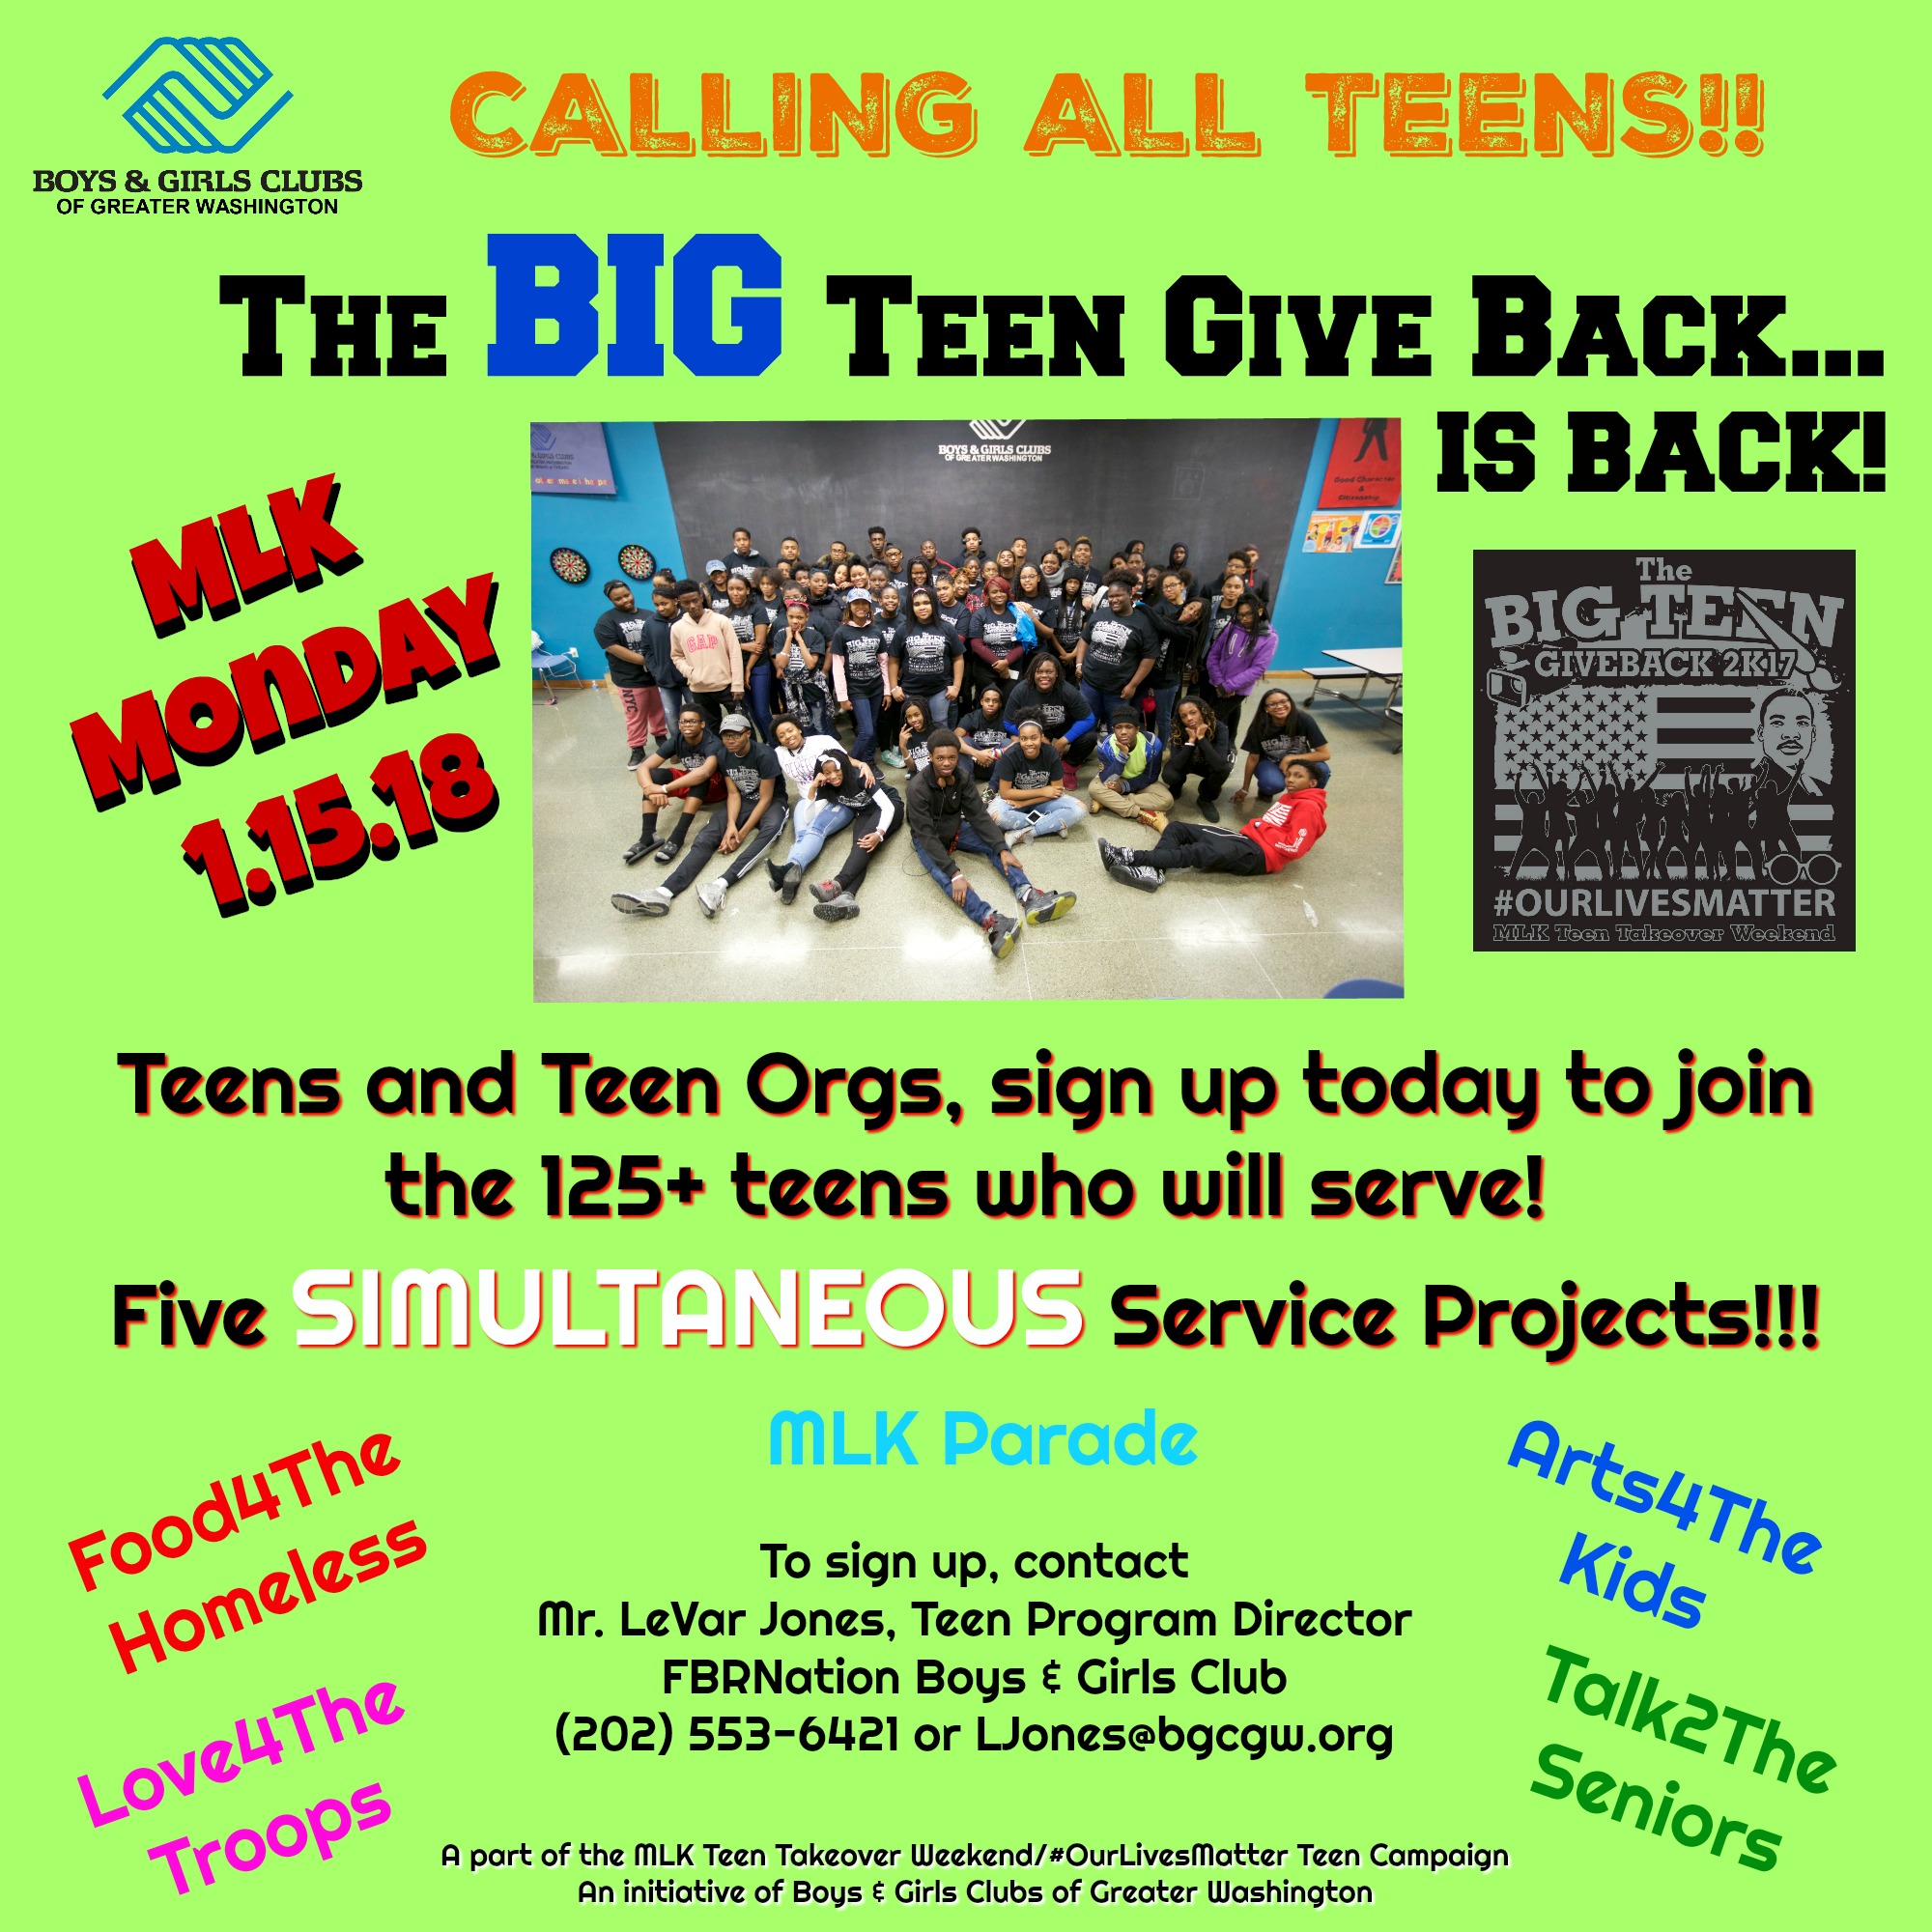 The Big Teen Give Back